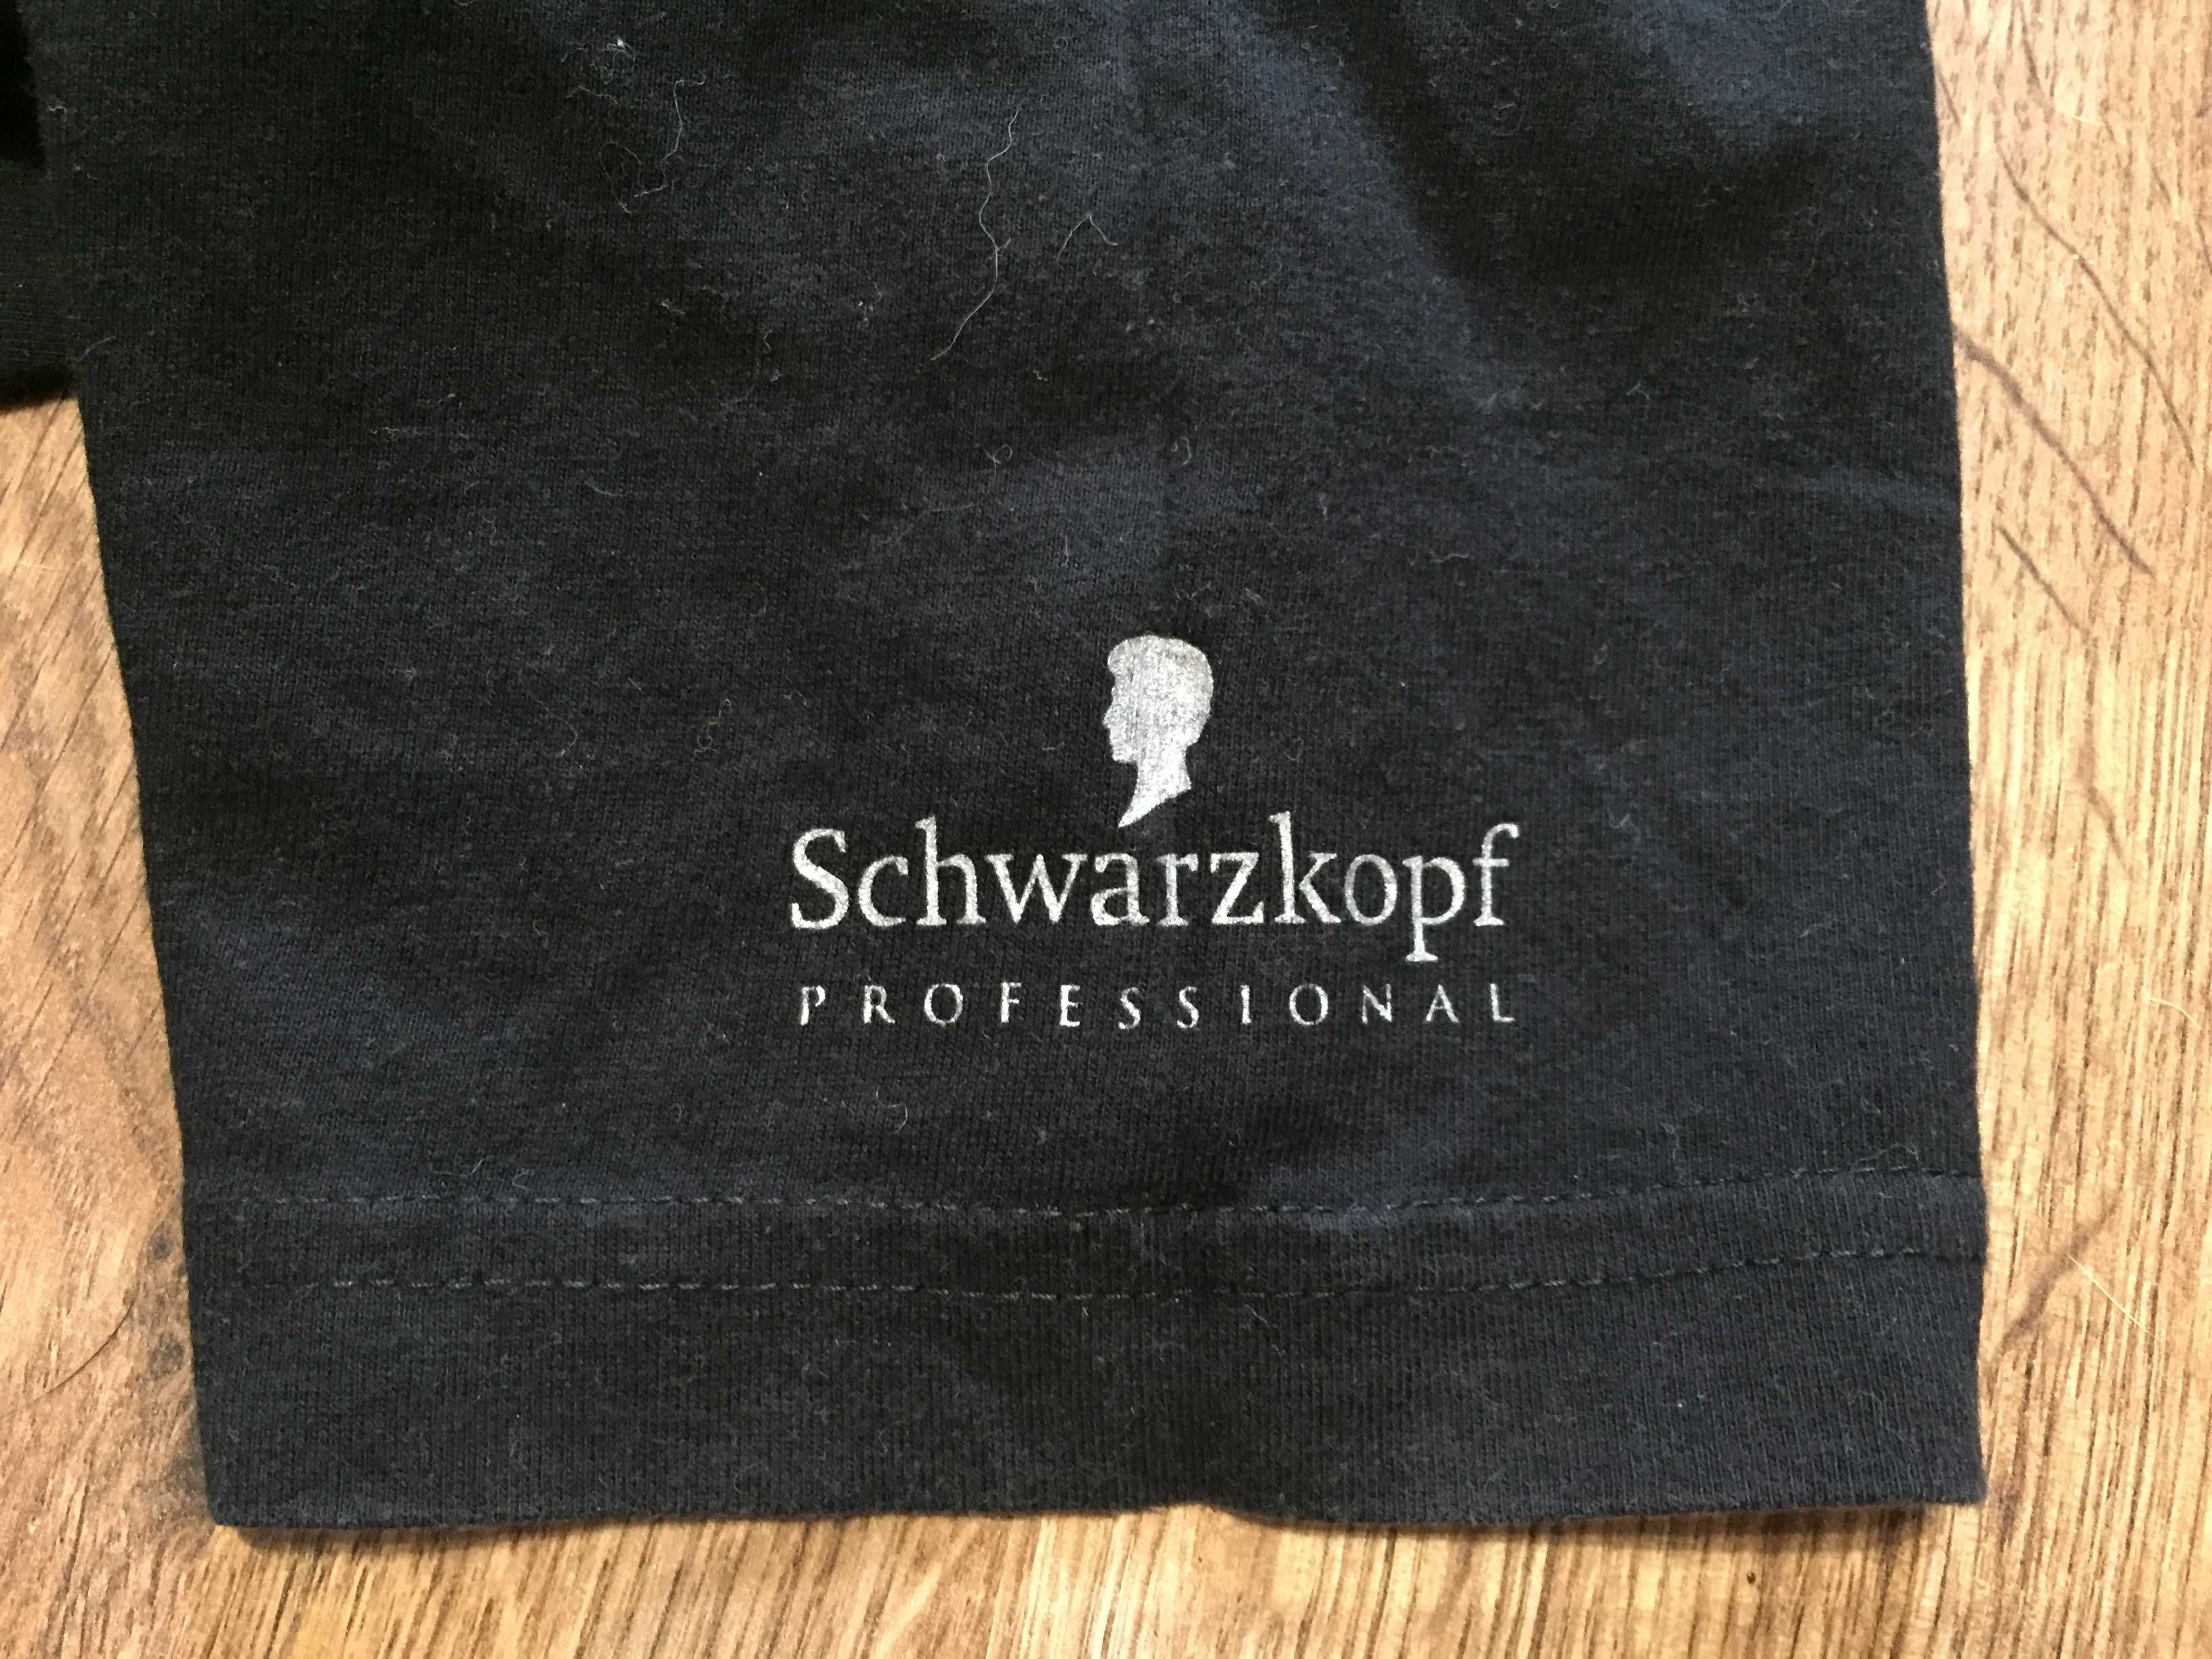 Schwarzkopf Professional Trainer koszulka T-shirt